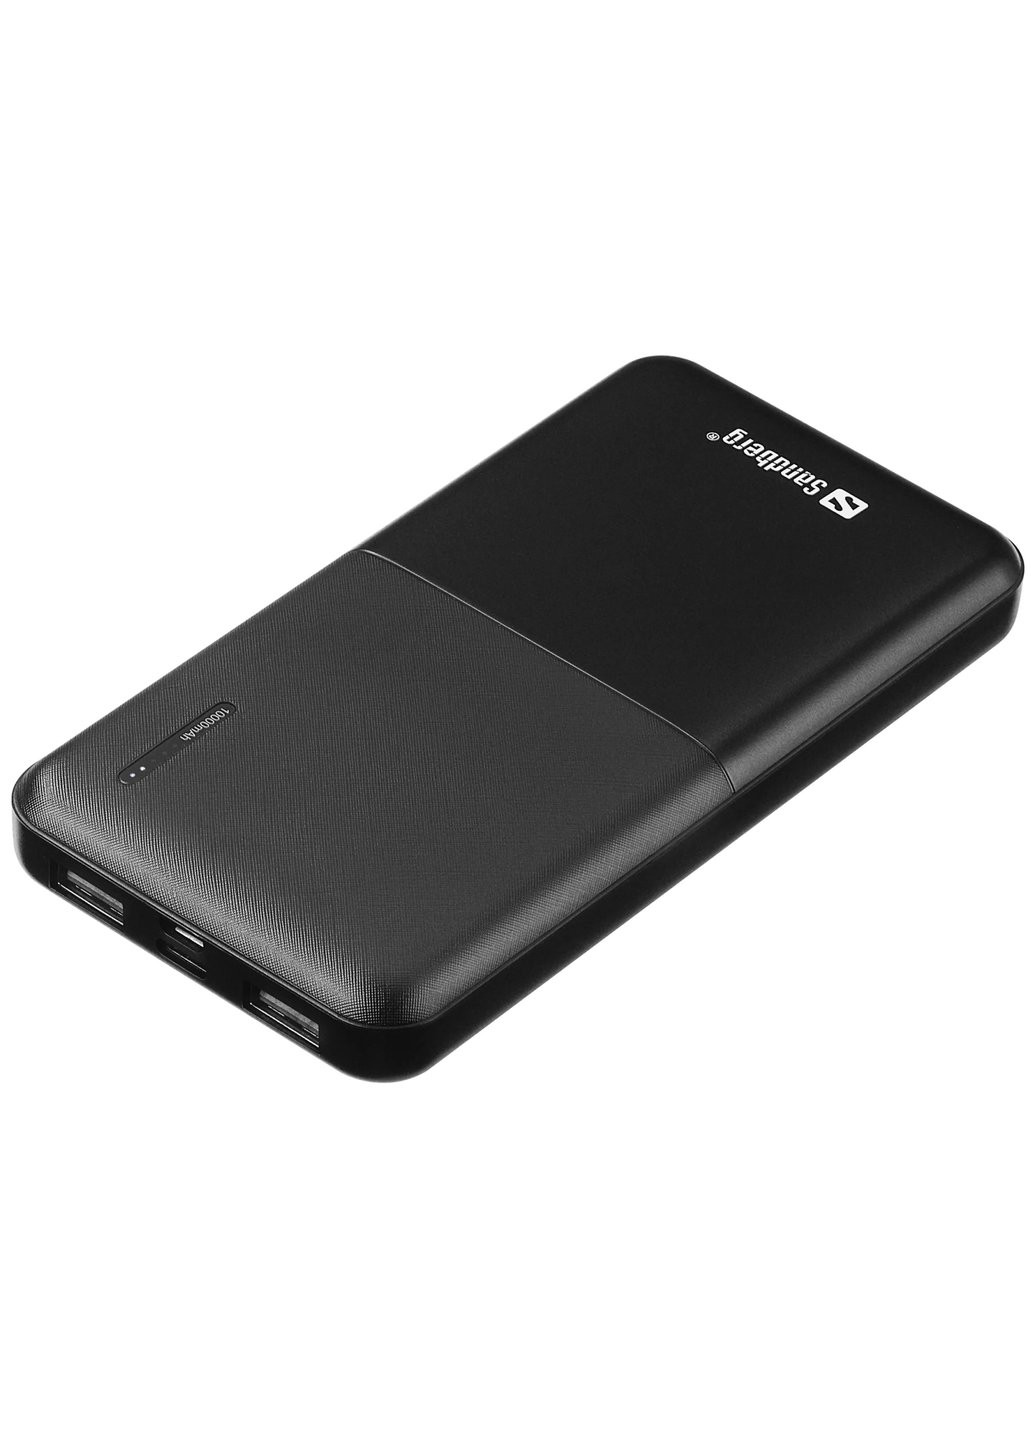 Батарея універсальна 10000mAh, Saver, USB-C, Micro-USB, output: USB-A*2 Total 5V/2.4A (320-34) Sandberg (257224866)